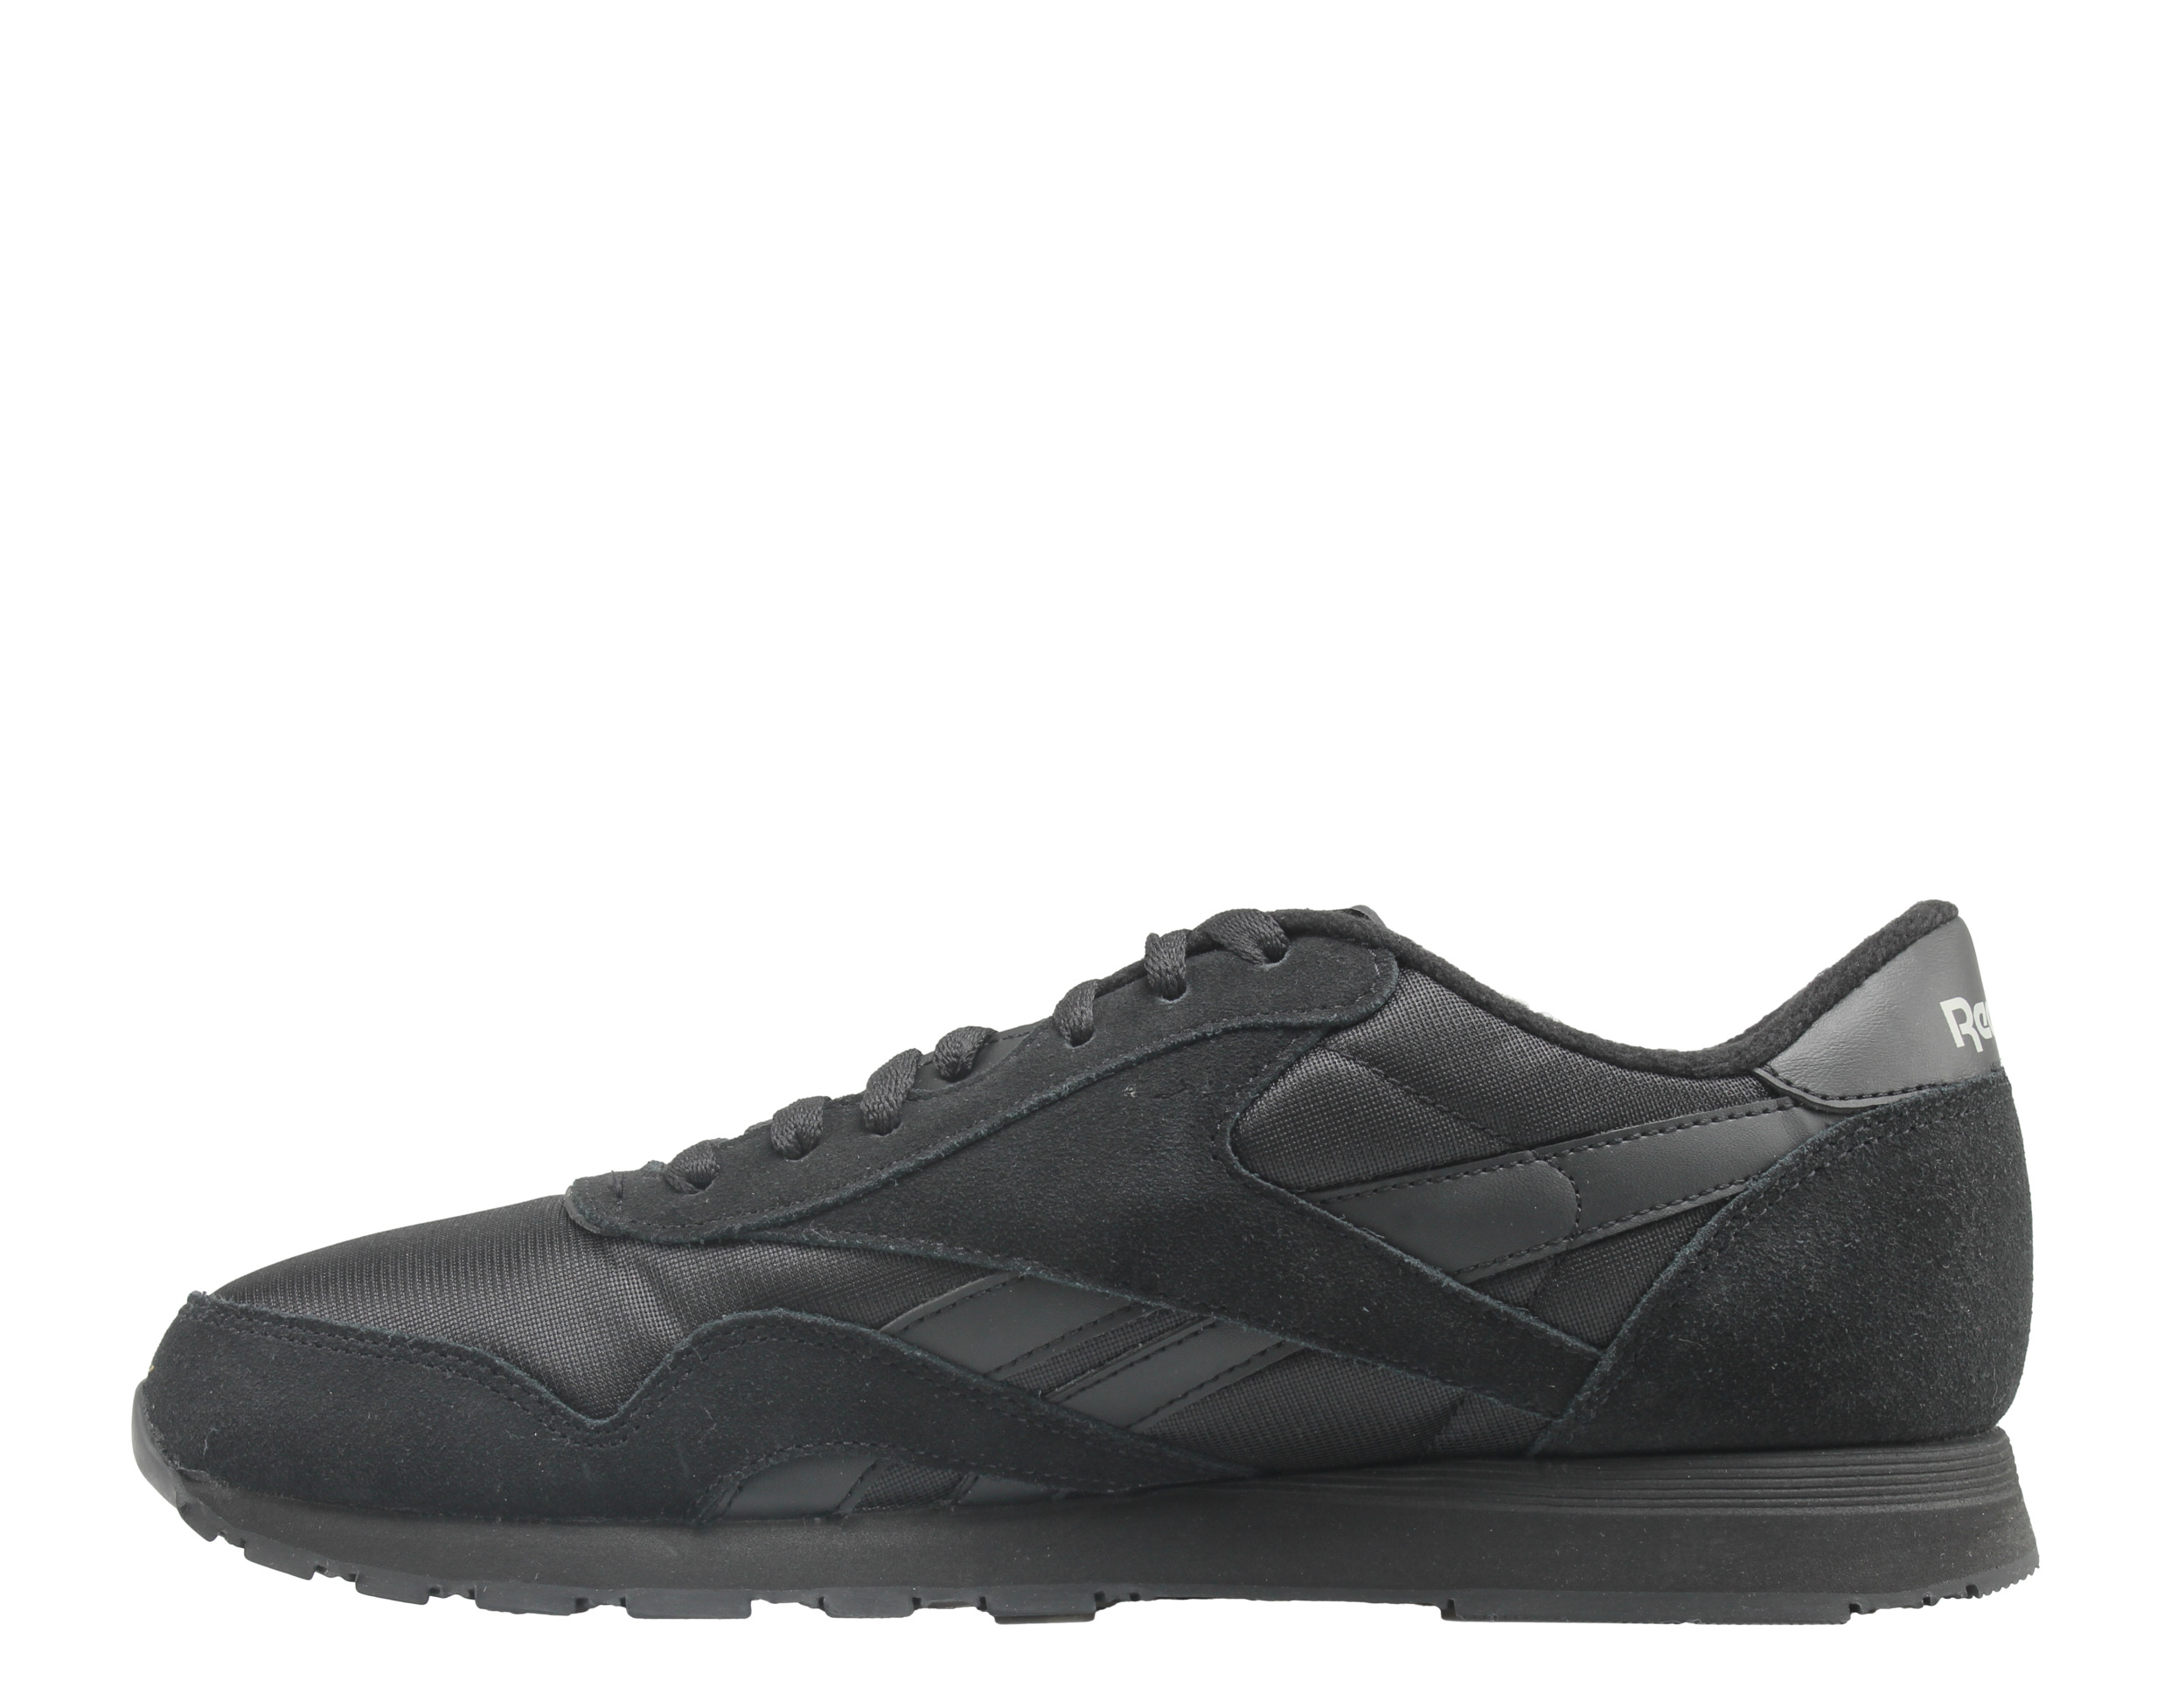 Reebok Classic Nylon Men's Running Shoes Size 12 - image 3 of 6